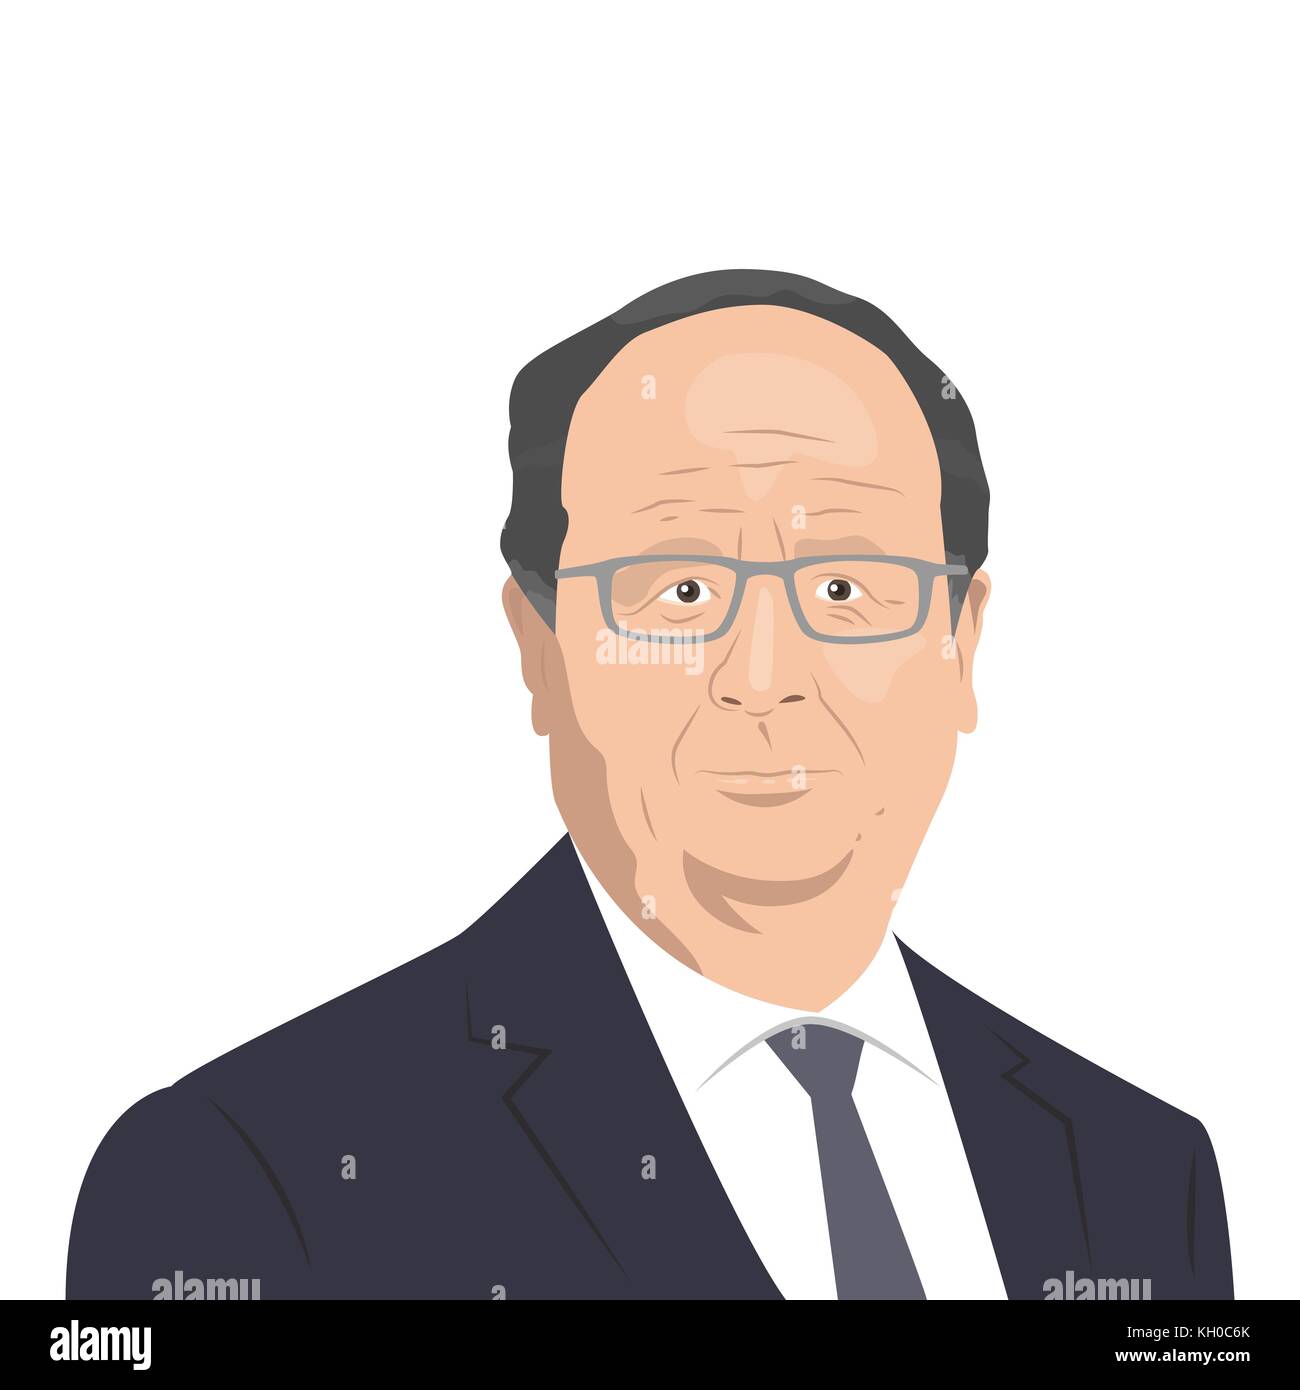 November 11, 2017. Editorial illustration of Francois Hollande portrait - Former President of the French Republic - on white background. Stock Vector